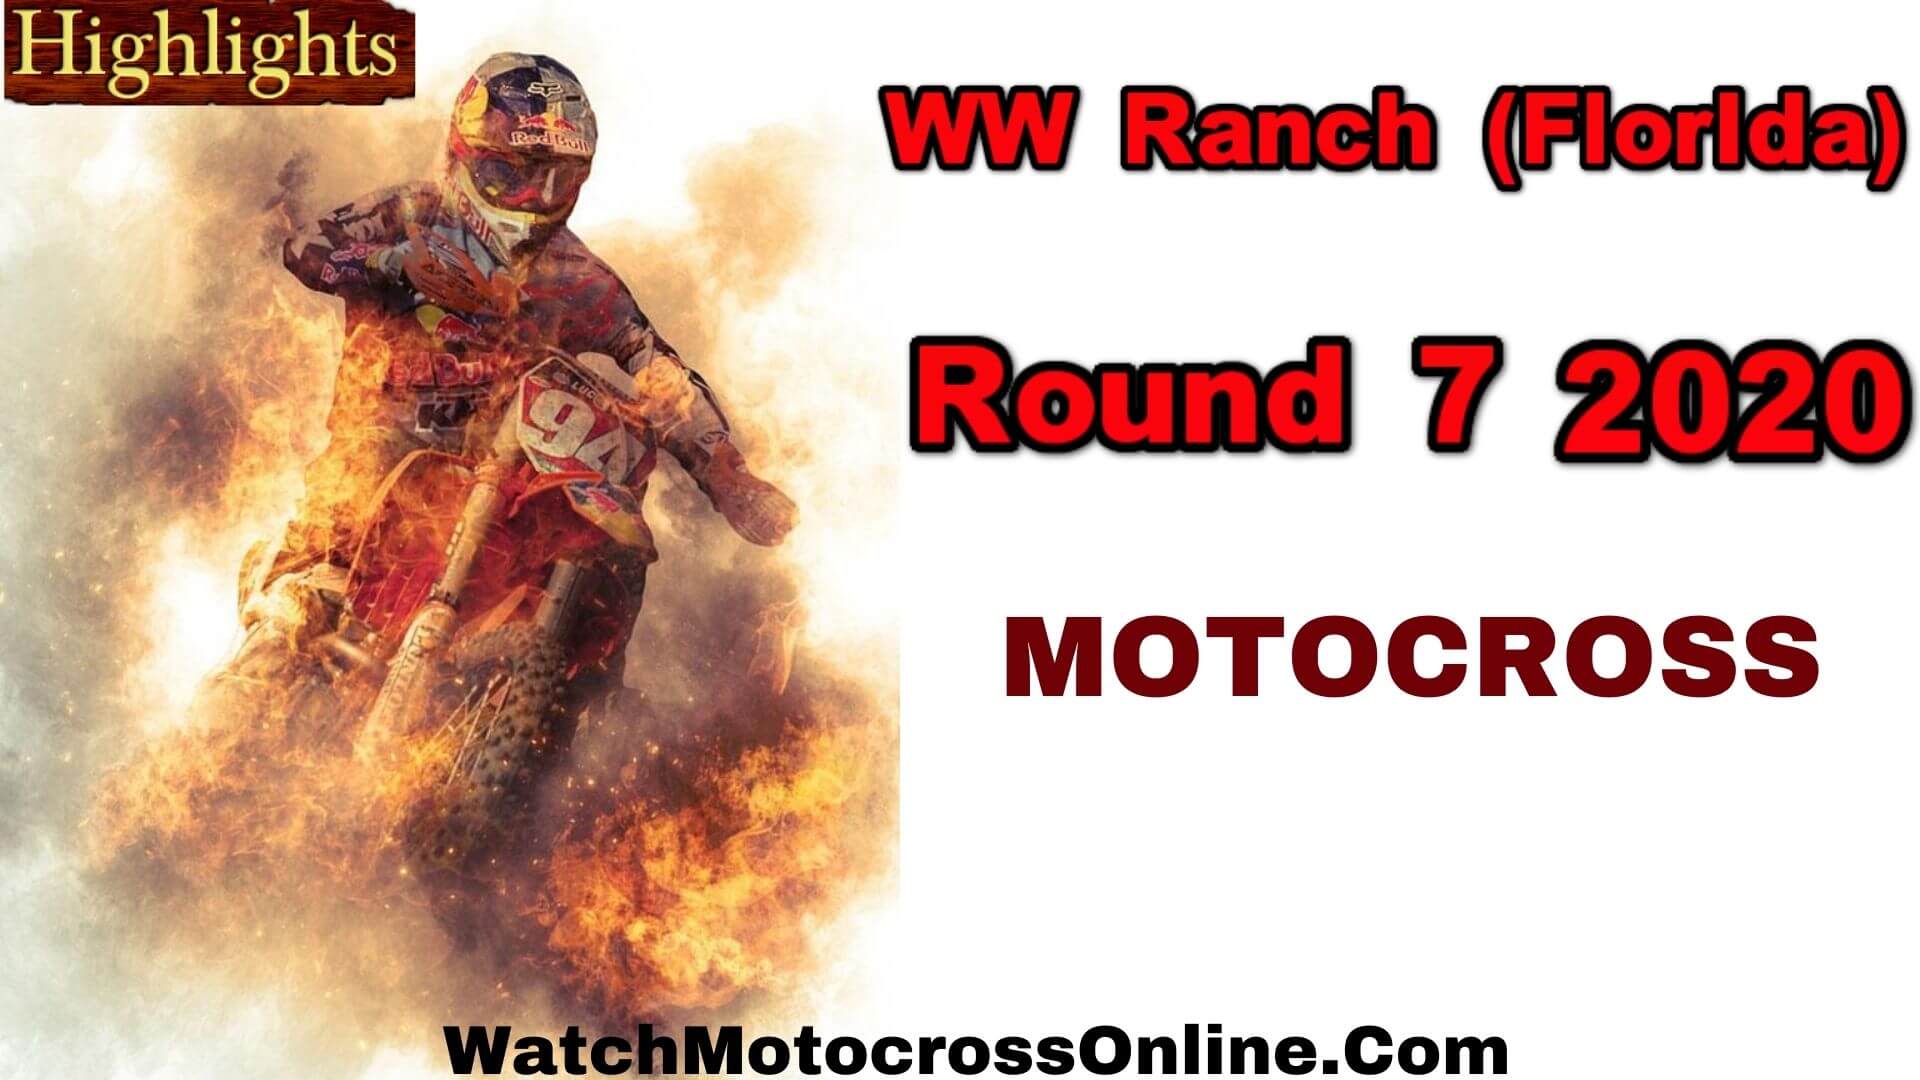 WW Ranch Round 7 Highlights 2020 Motocross